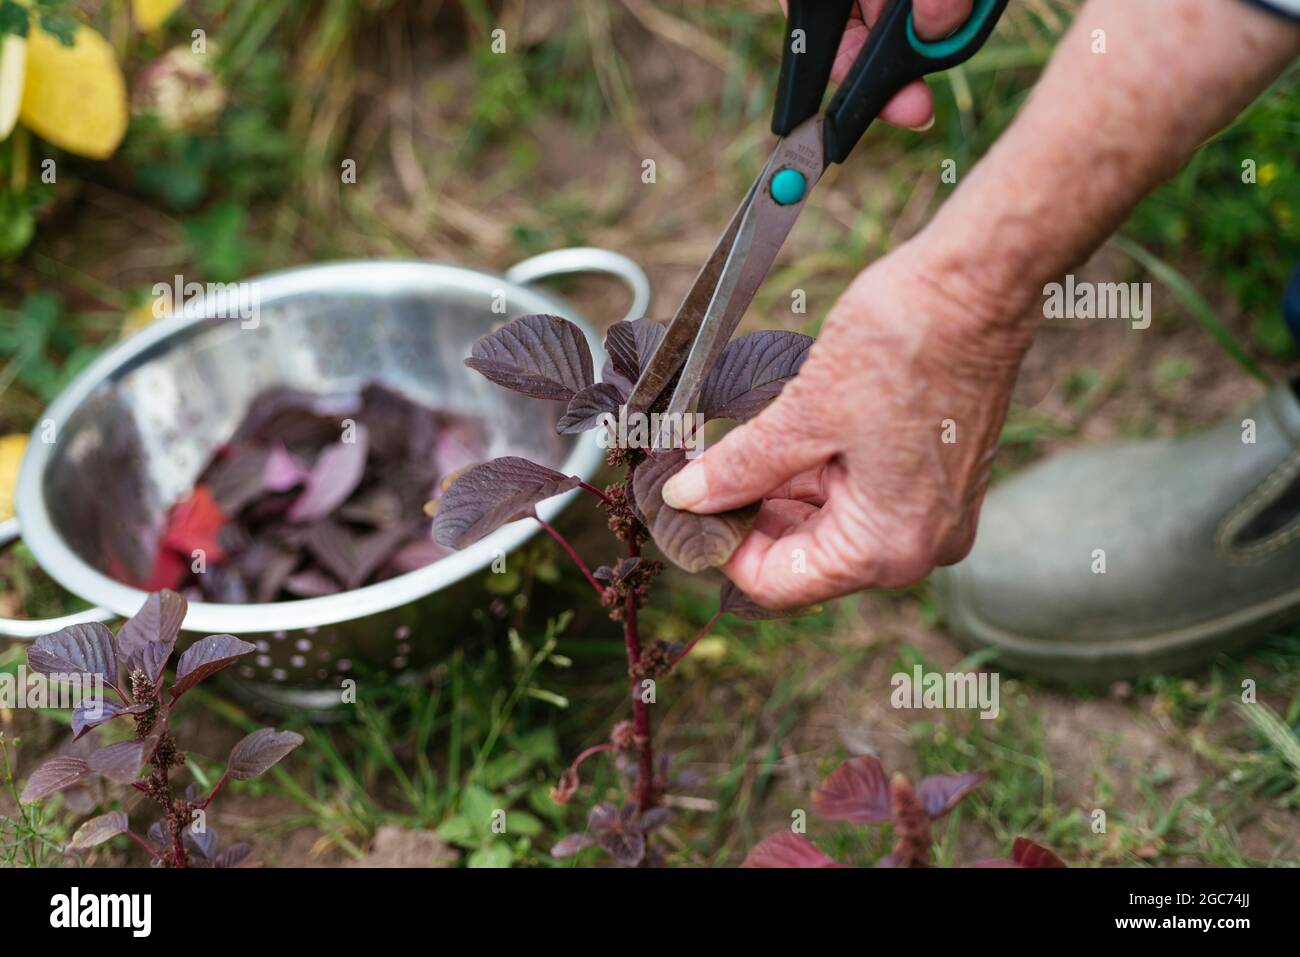 Gardener harvesting purple amaranth (Amaranthus blitum). Stock Photo